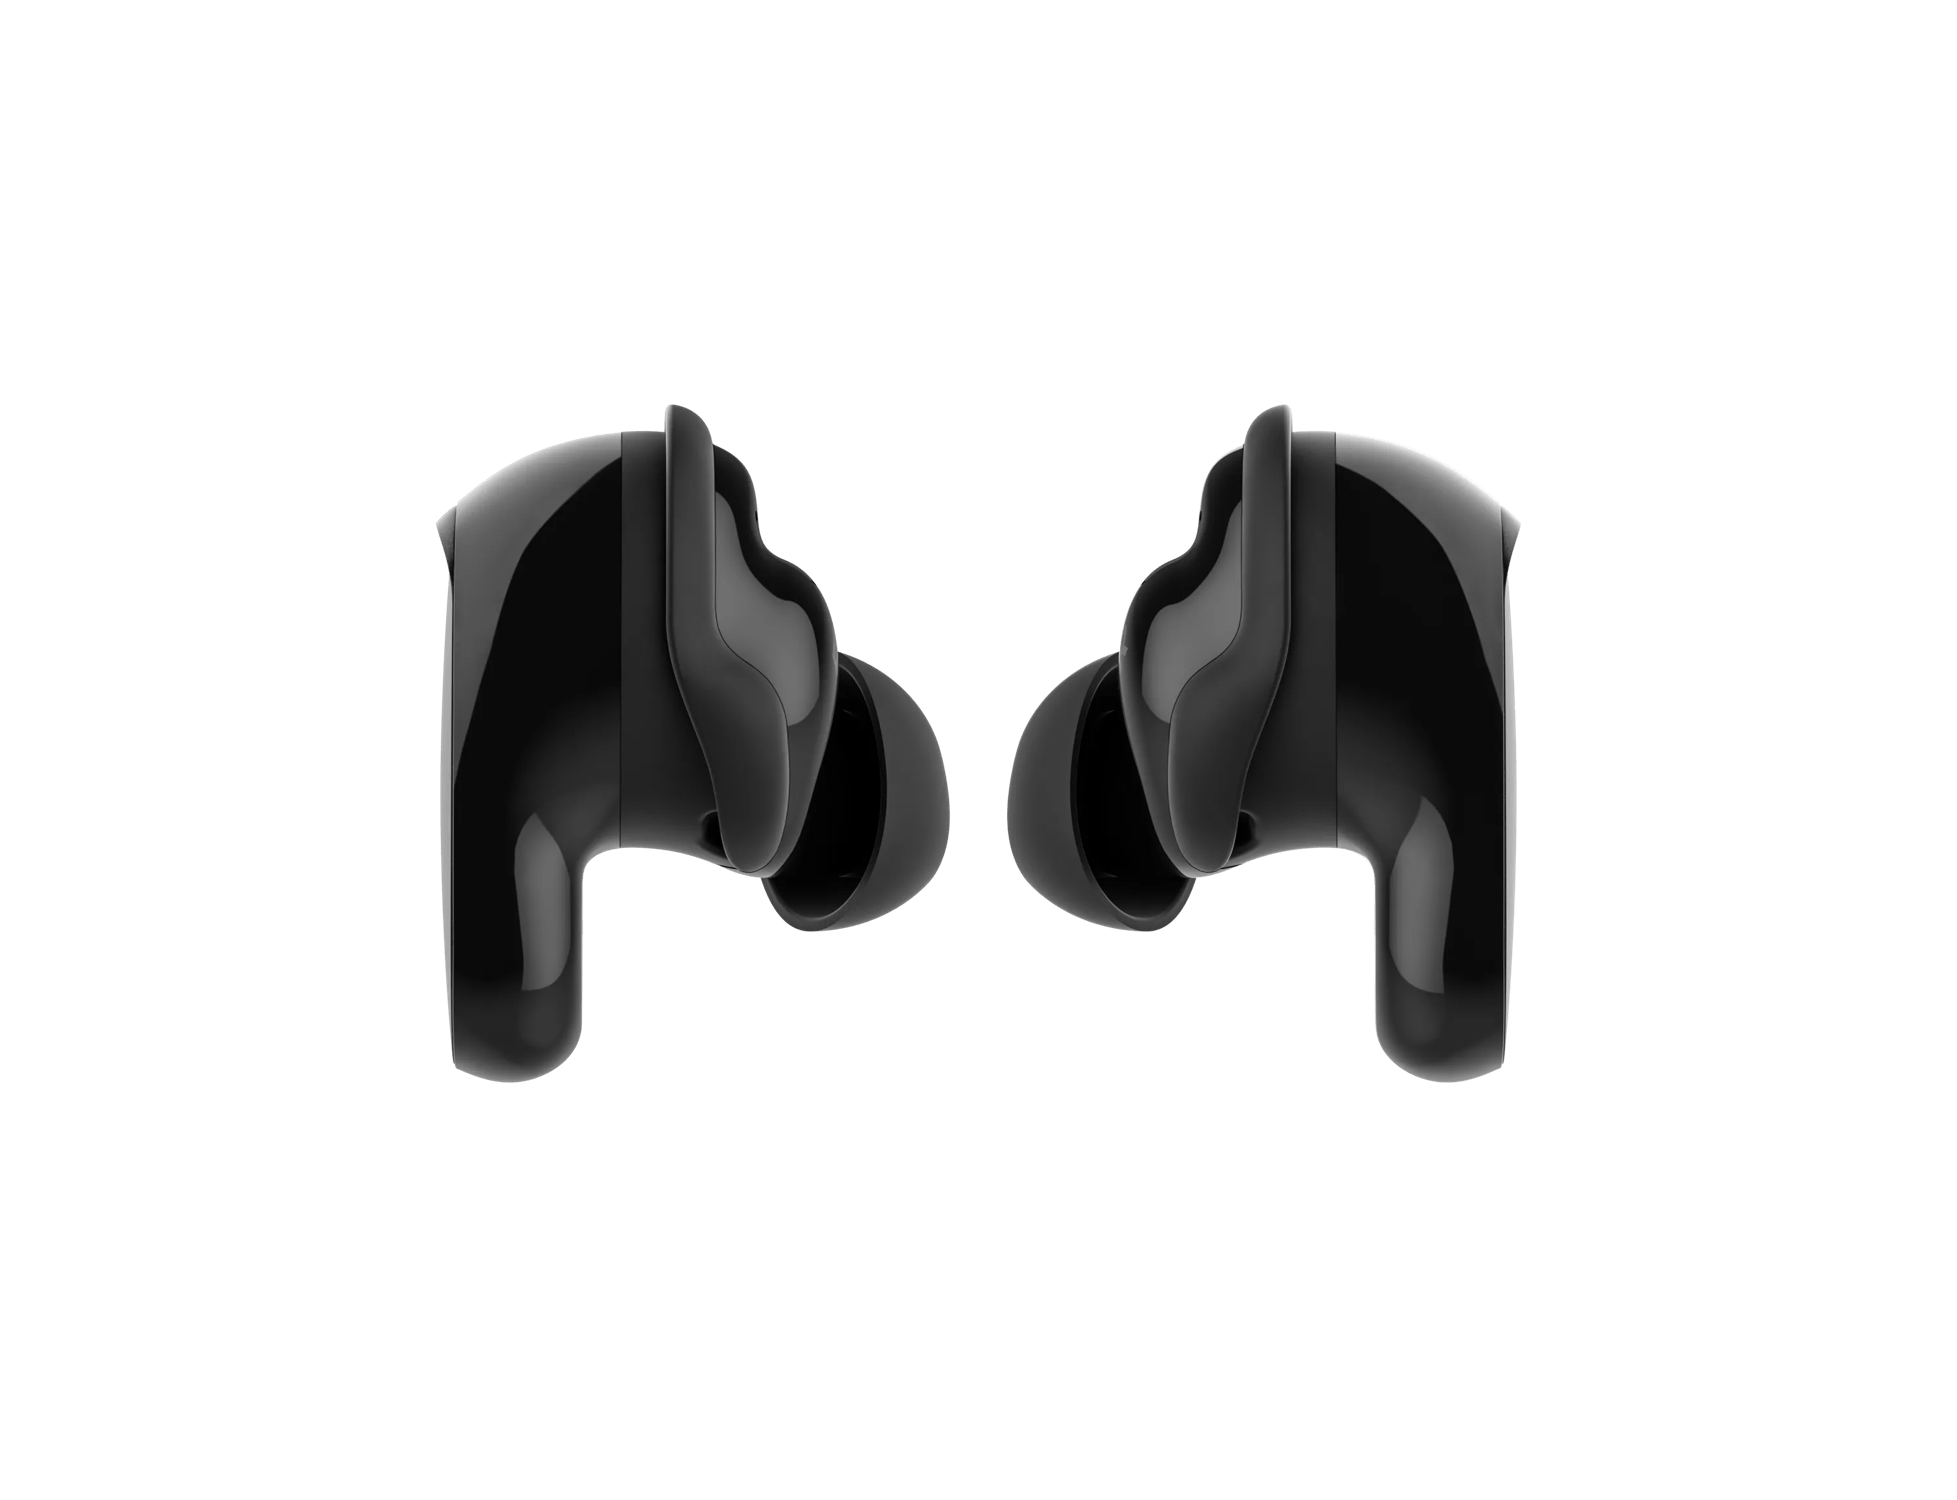 Triple Black Bose QuietComfort Earbuds II